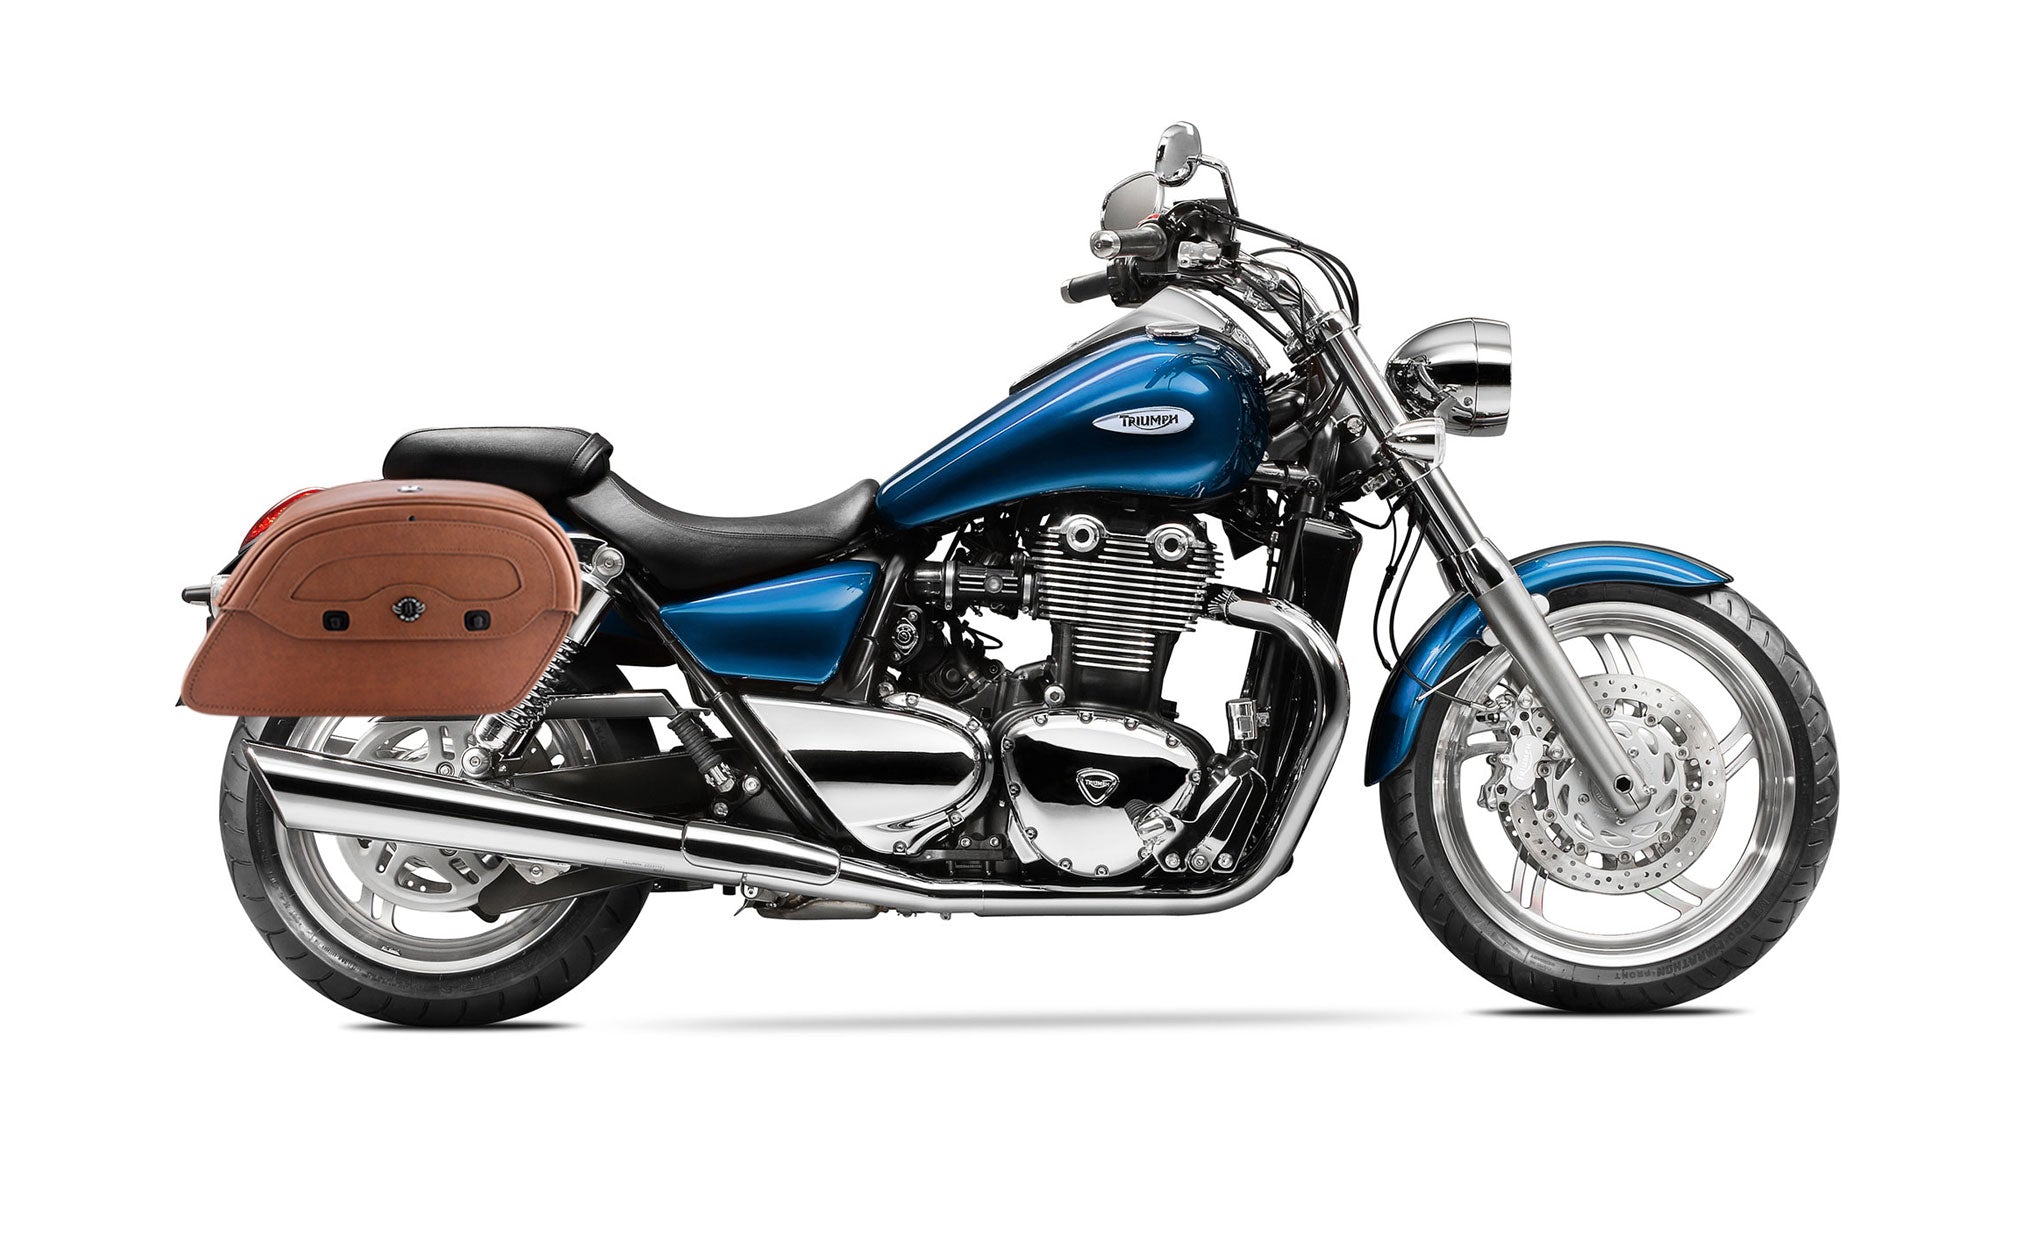 Viking Warrior Brown Large Triumph Thunderbird Leather Motorcycle Saddlebags on Bike Photo @expand